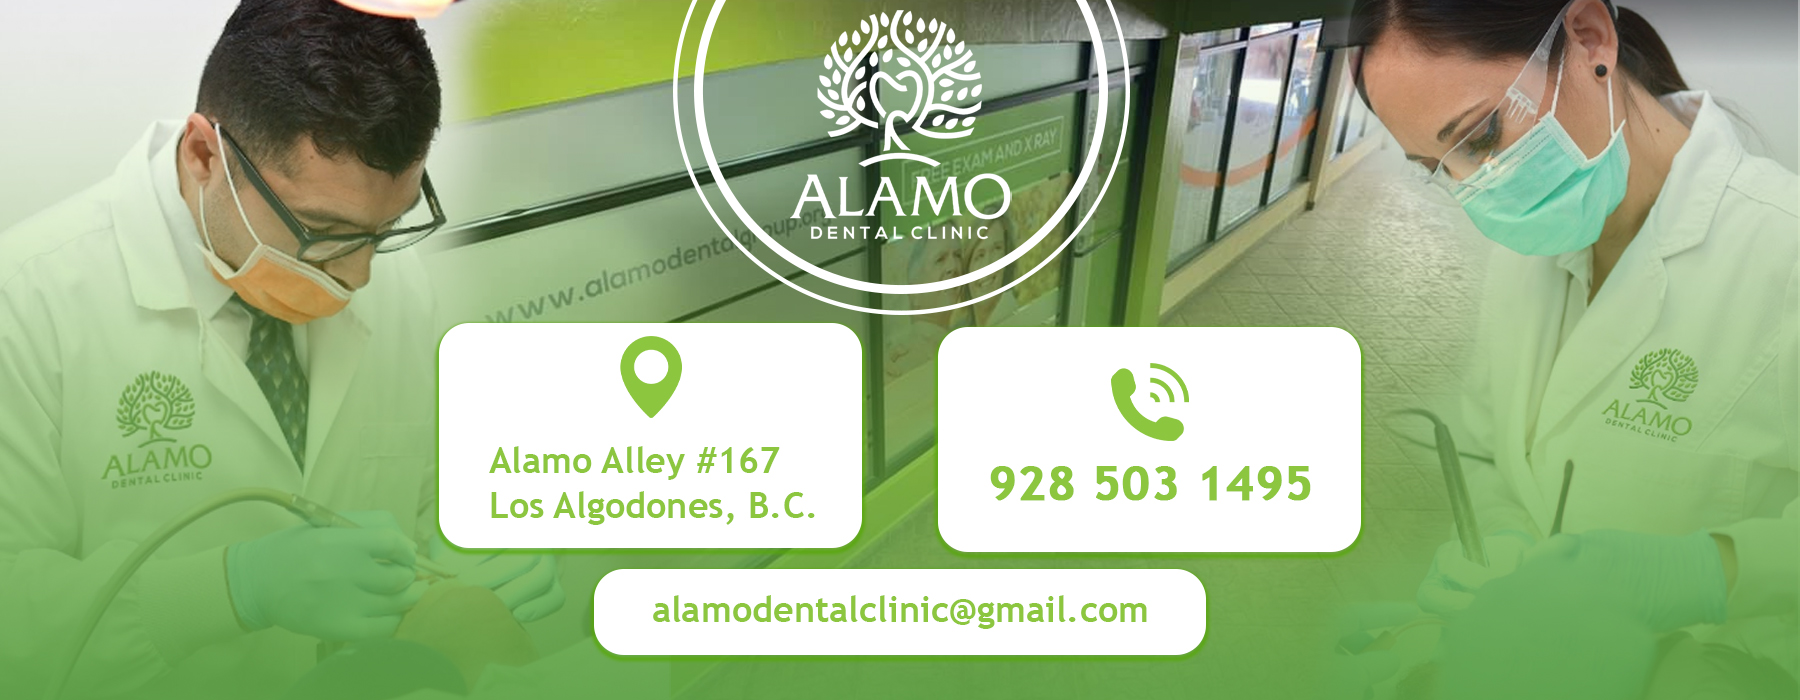  Alamo Dental Clinic